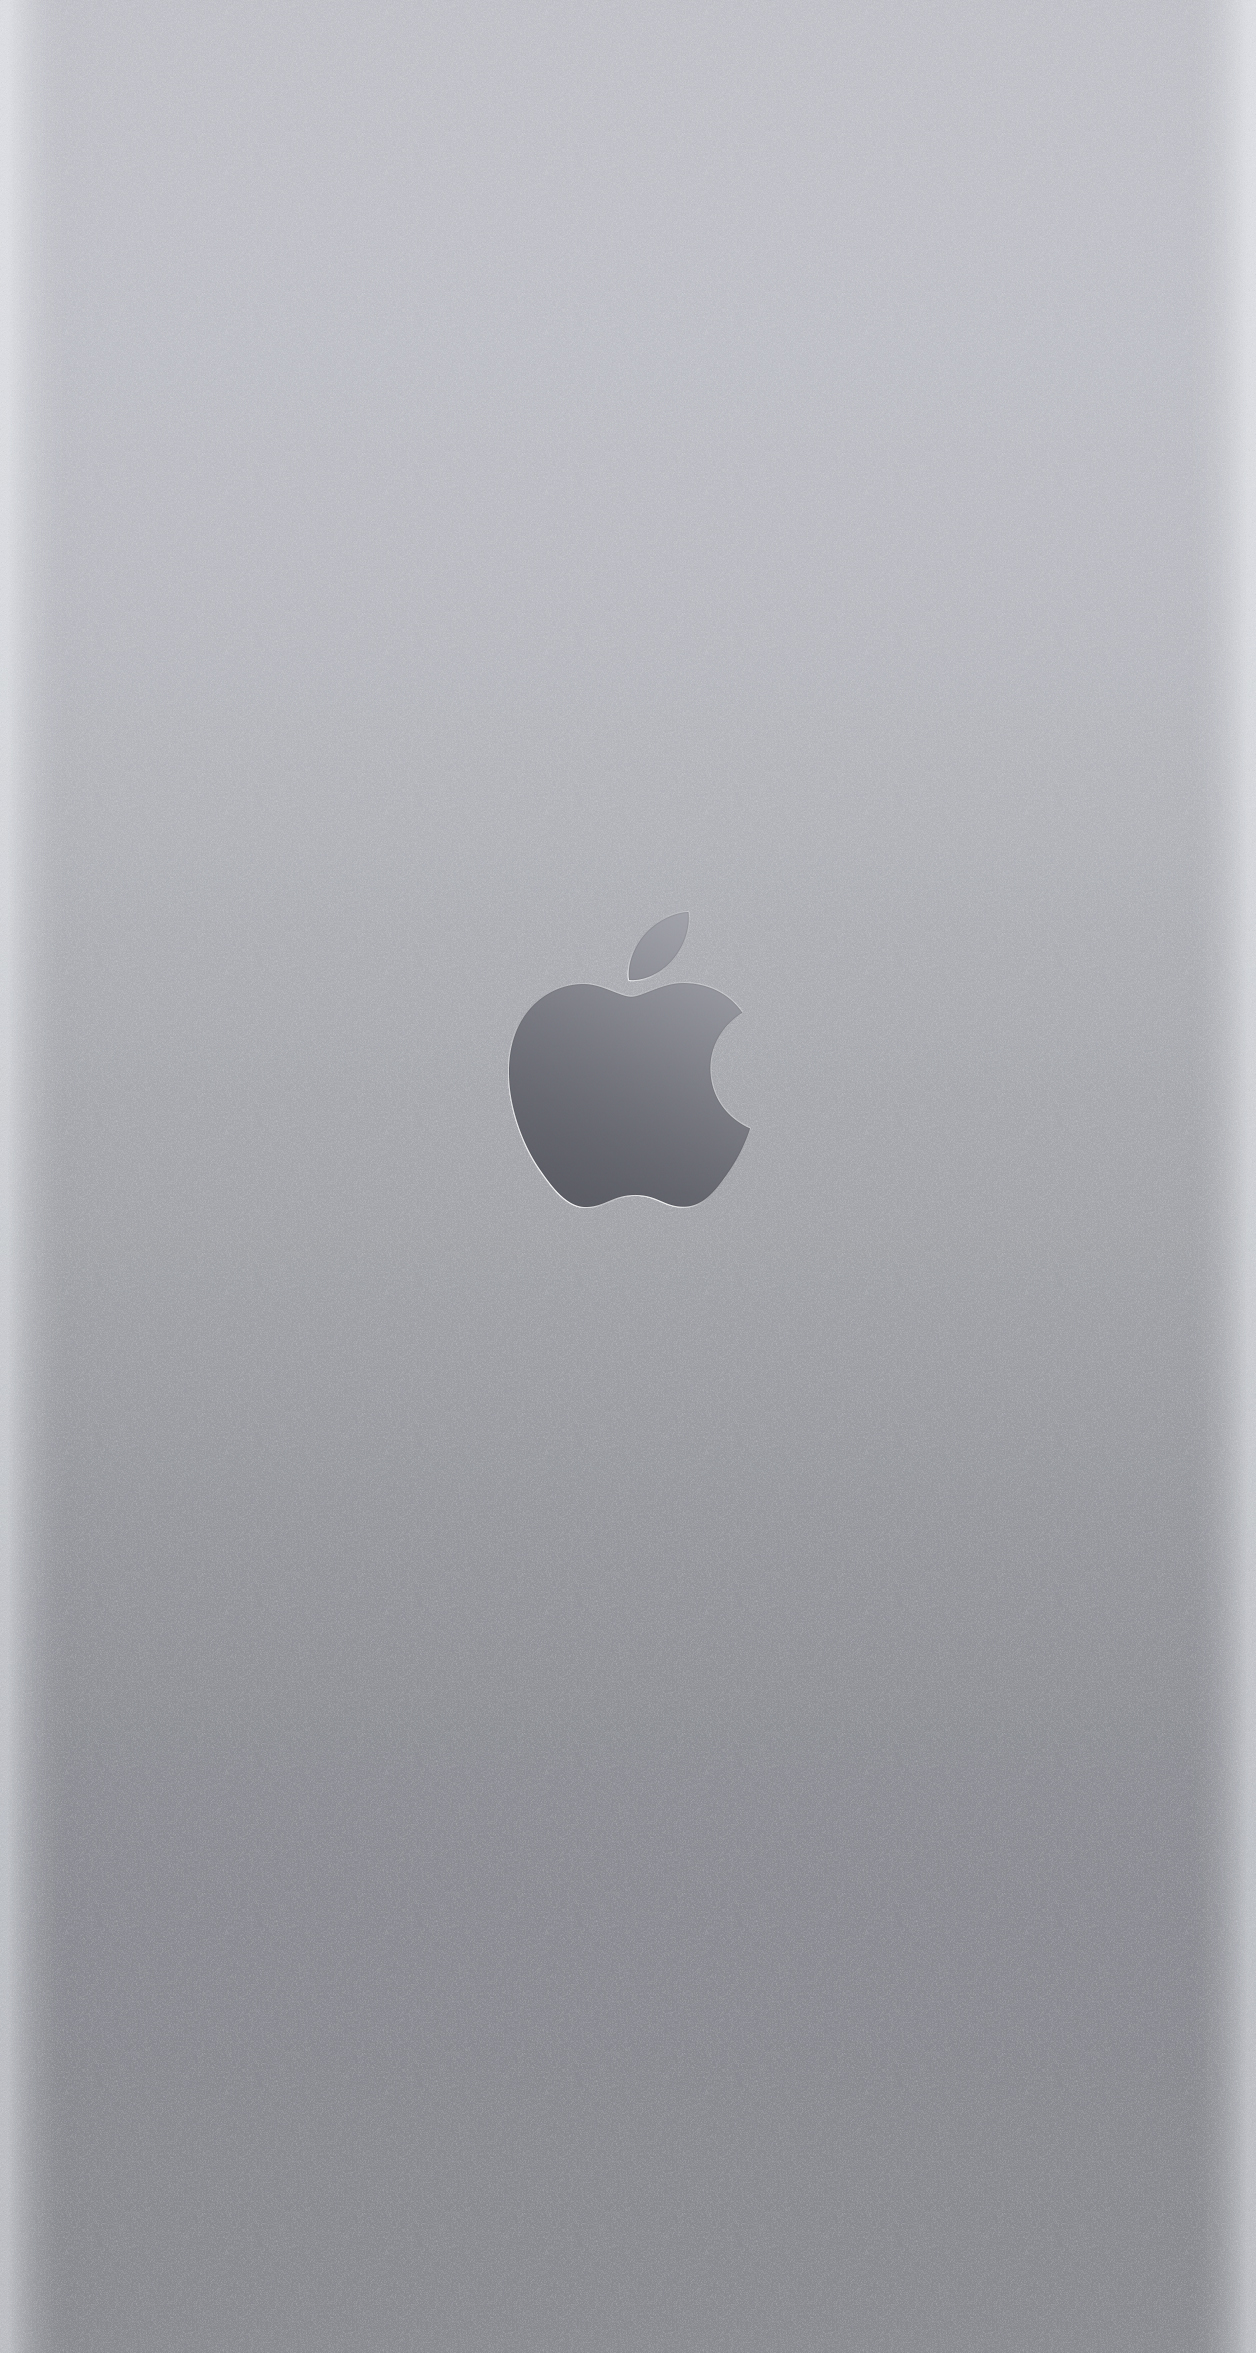 49 Apple Wallpaper For Iphone 6 On Wallpapersafari